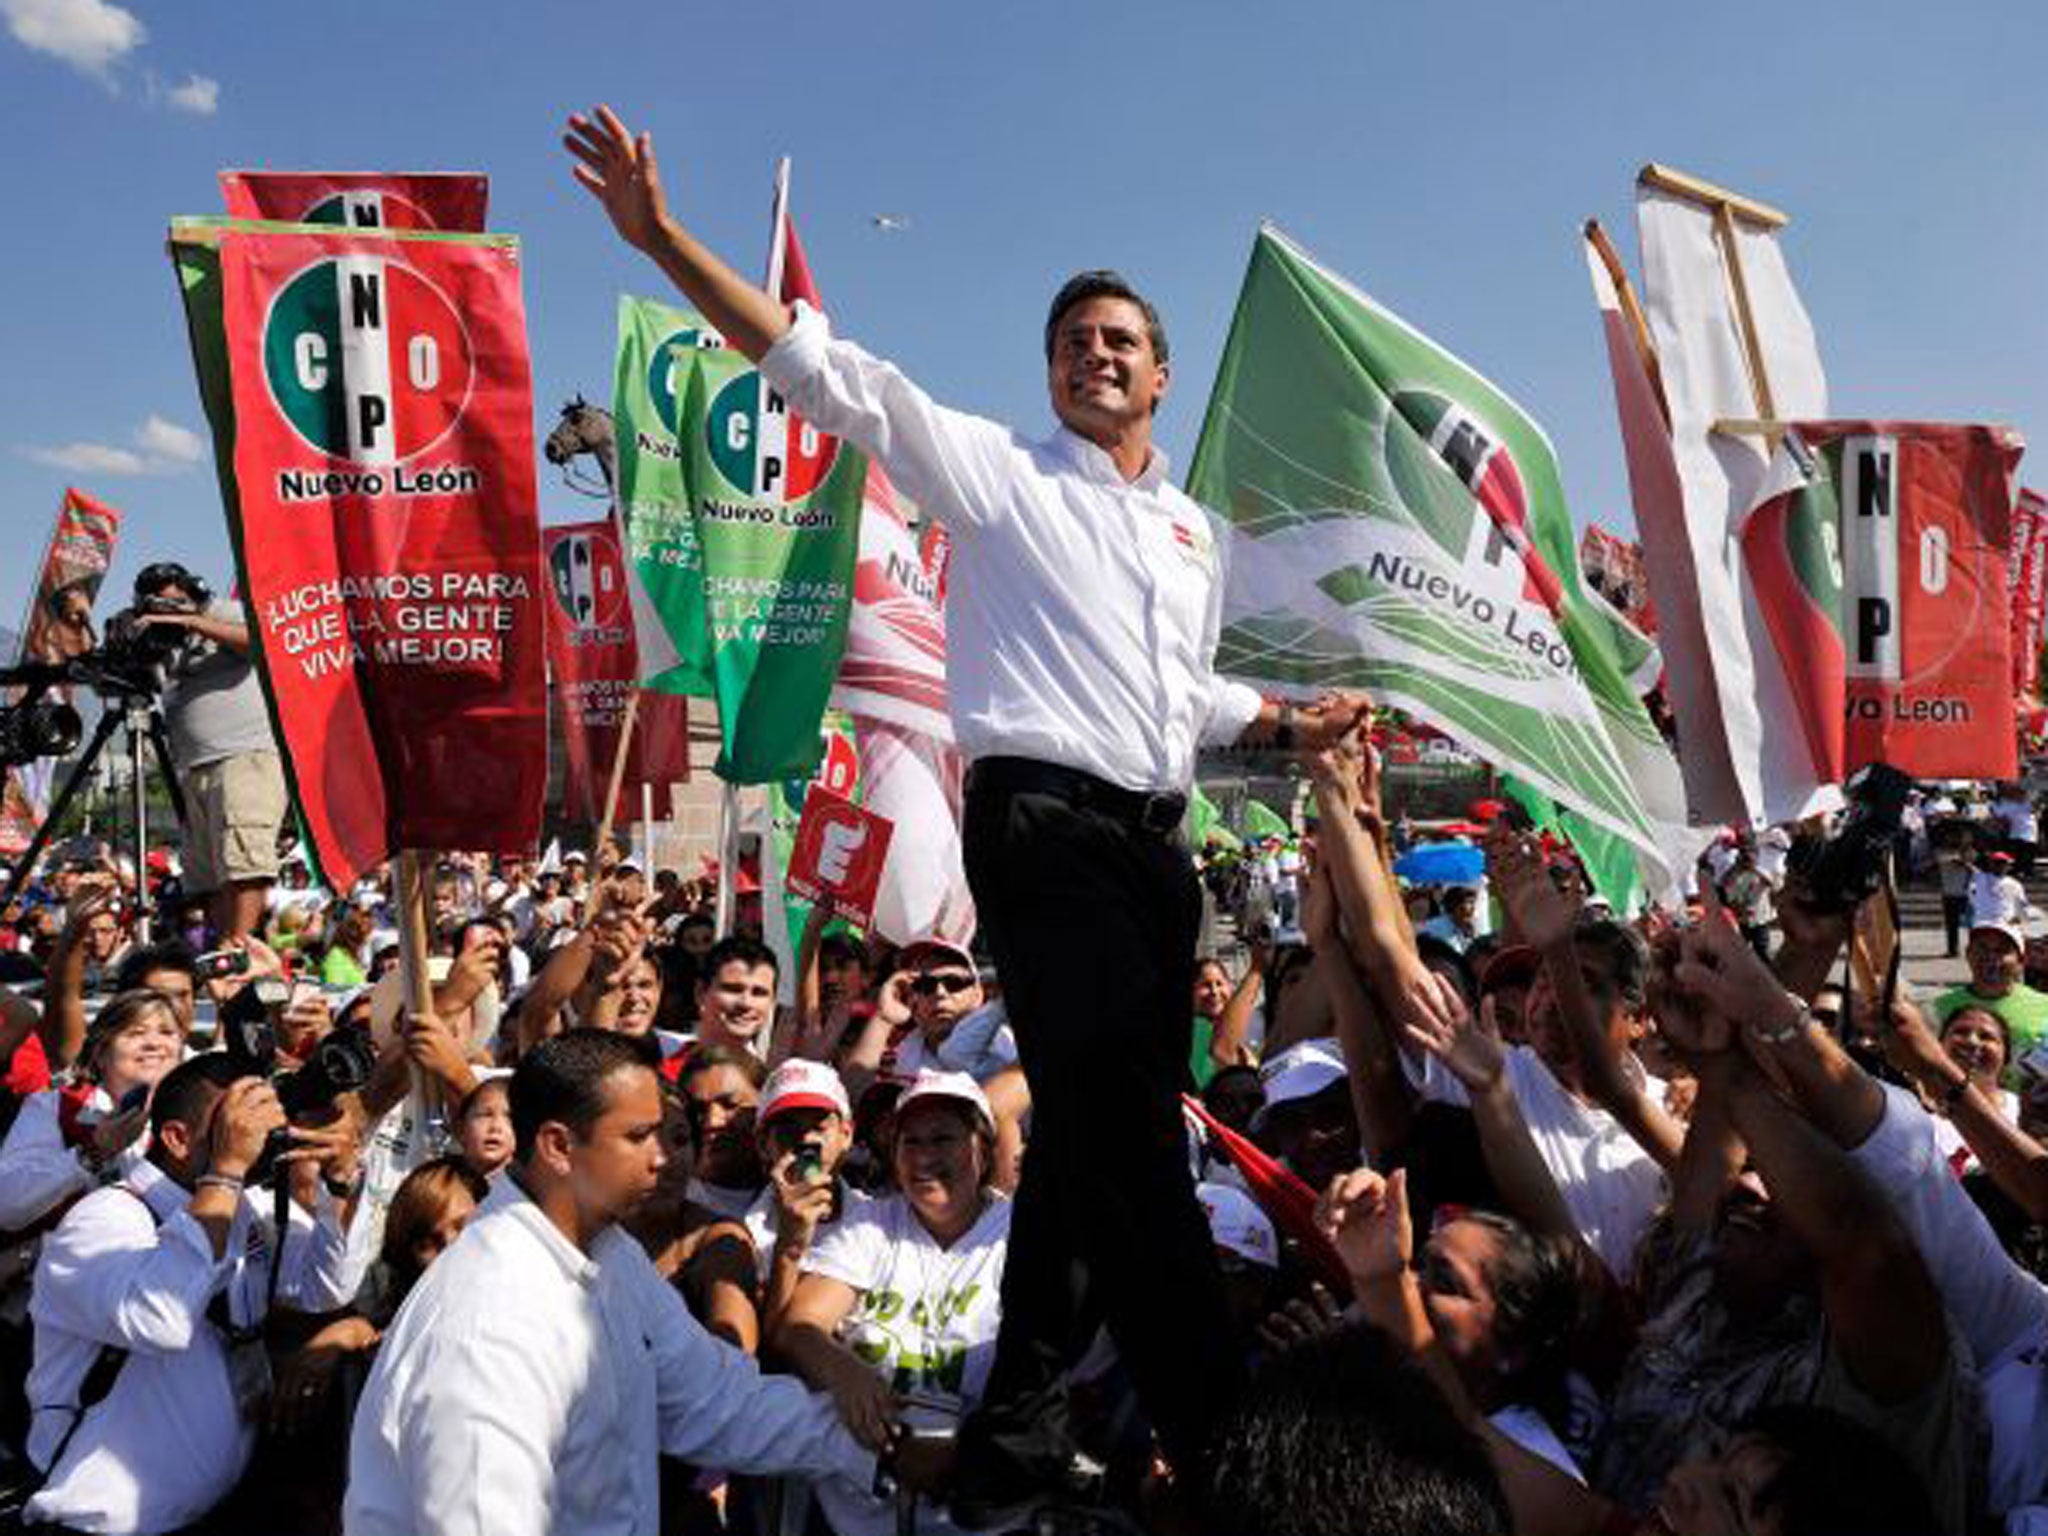 Mexico’s new president, Enrique Peña Nieto, will be sworn in today